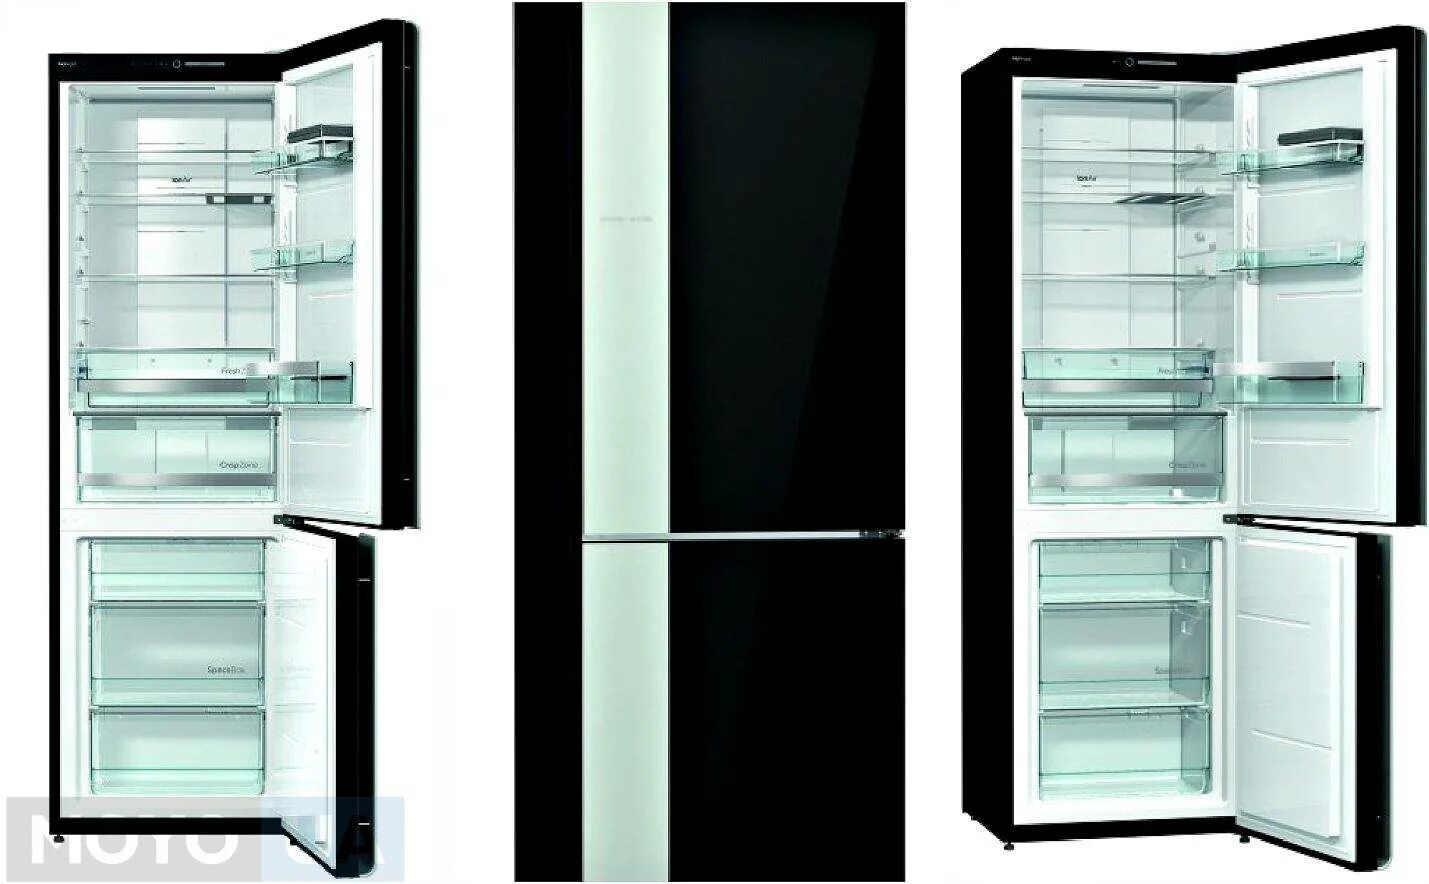 Gorenje nrk6191pw4. Холодильник Gorenje nrk6202aw4. Холодильник горенья модель nrk6191gx. Gorenje NRK 6202 чёрный. Холодильник Gorenje модель nrk68syb.